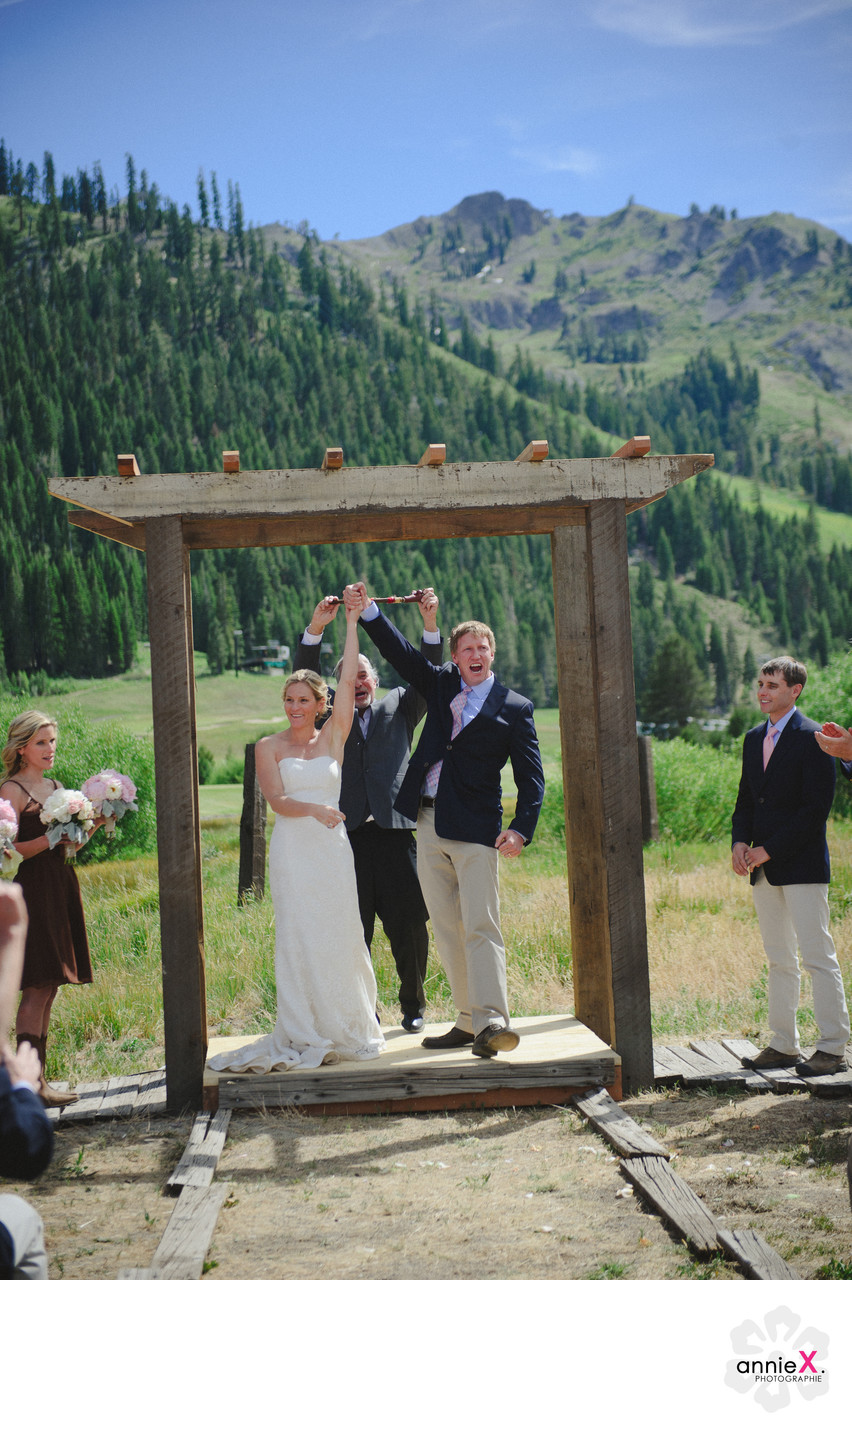 Best Documentary wedding photographer in Tahoe
